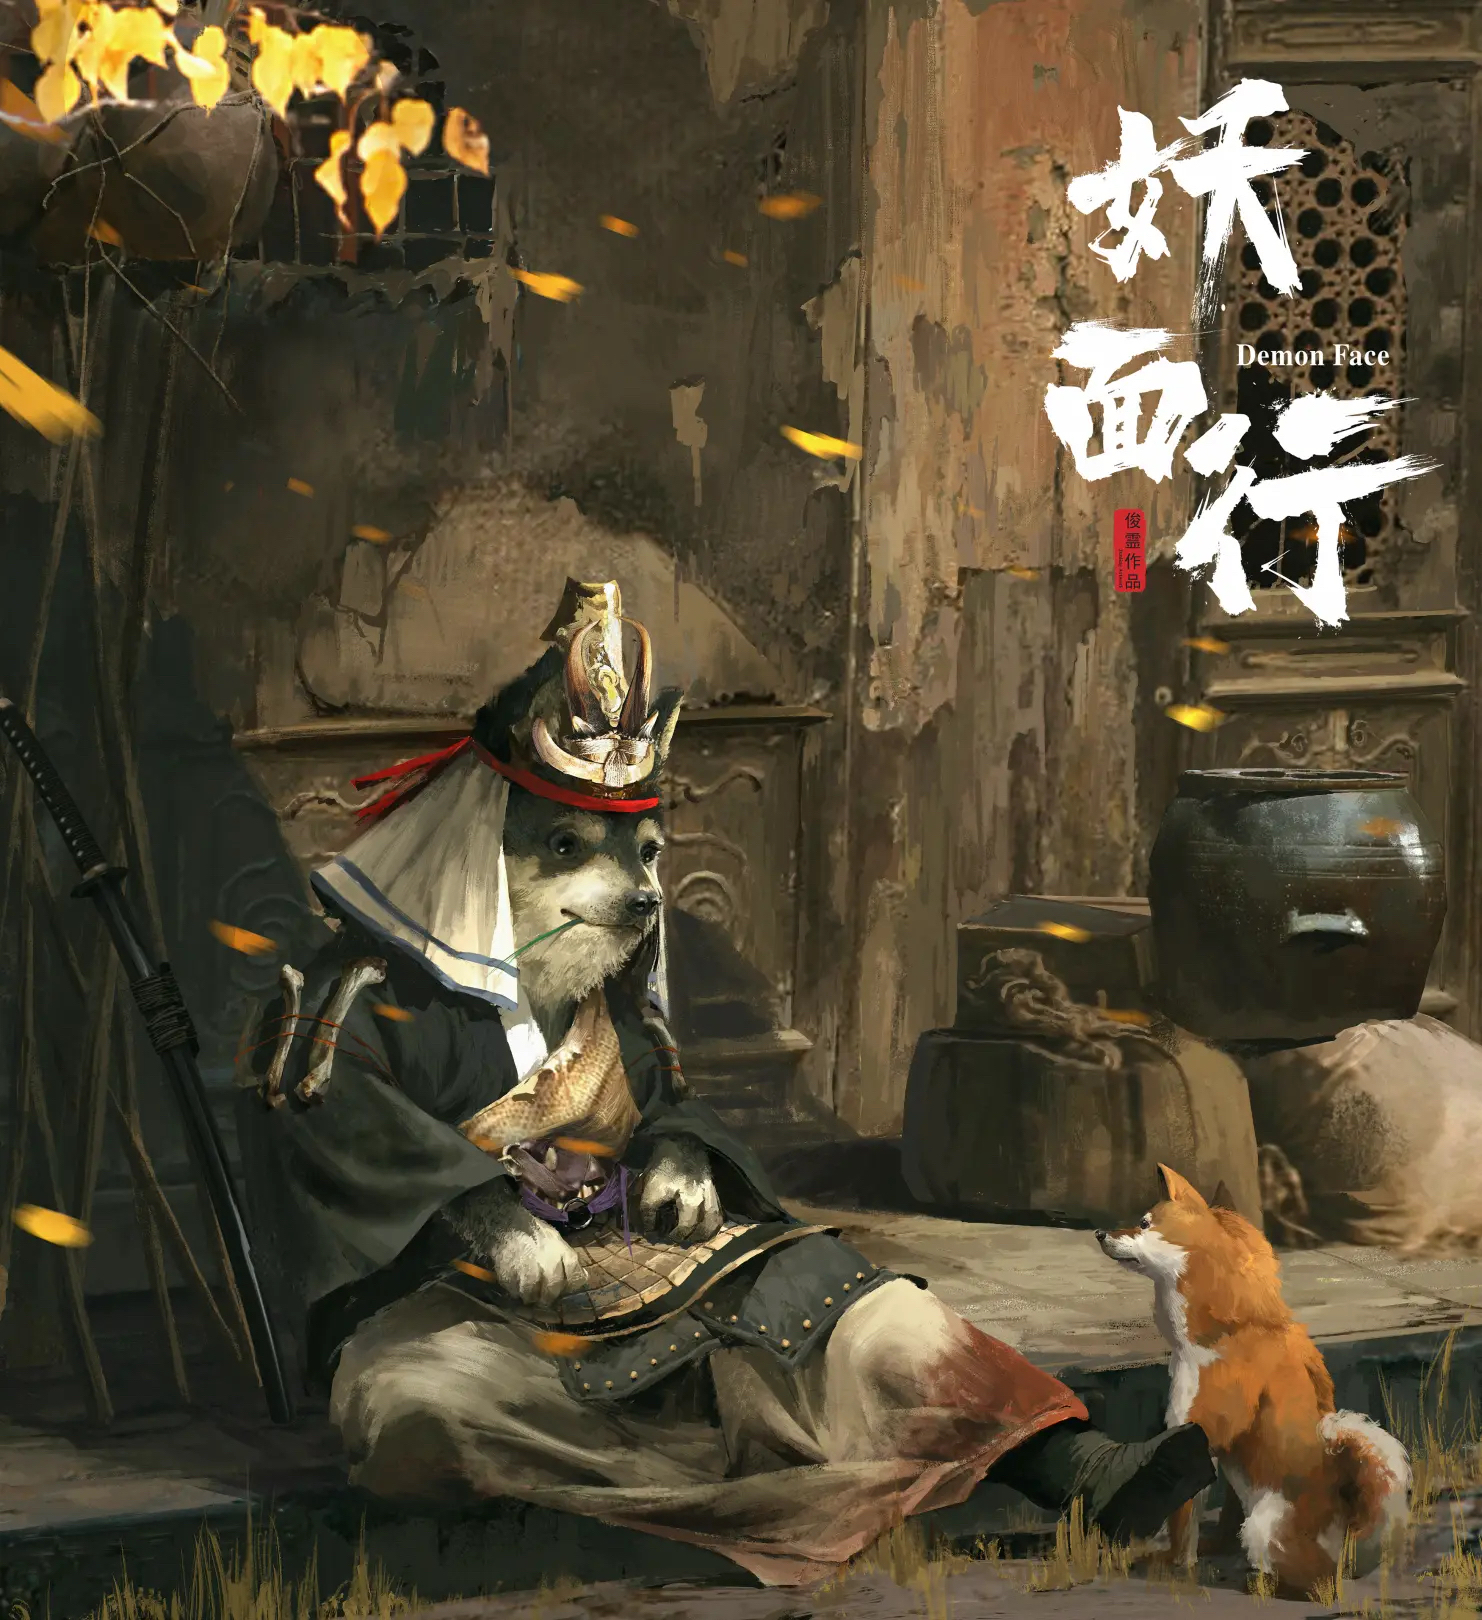 Anime 1482x1620 Demon face animals dog artwork samurai